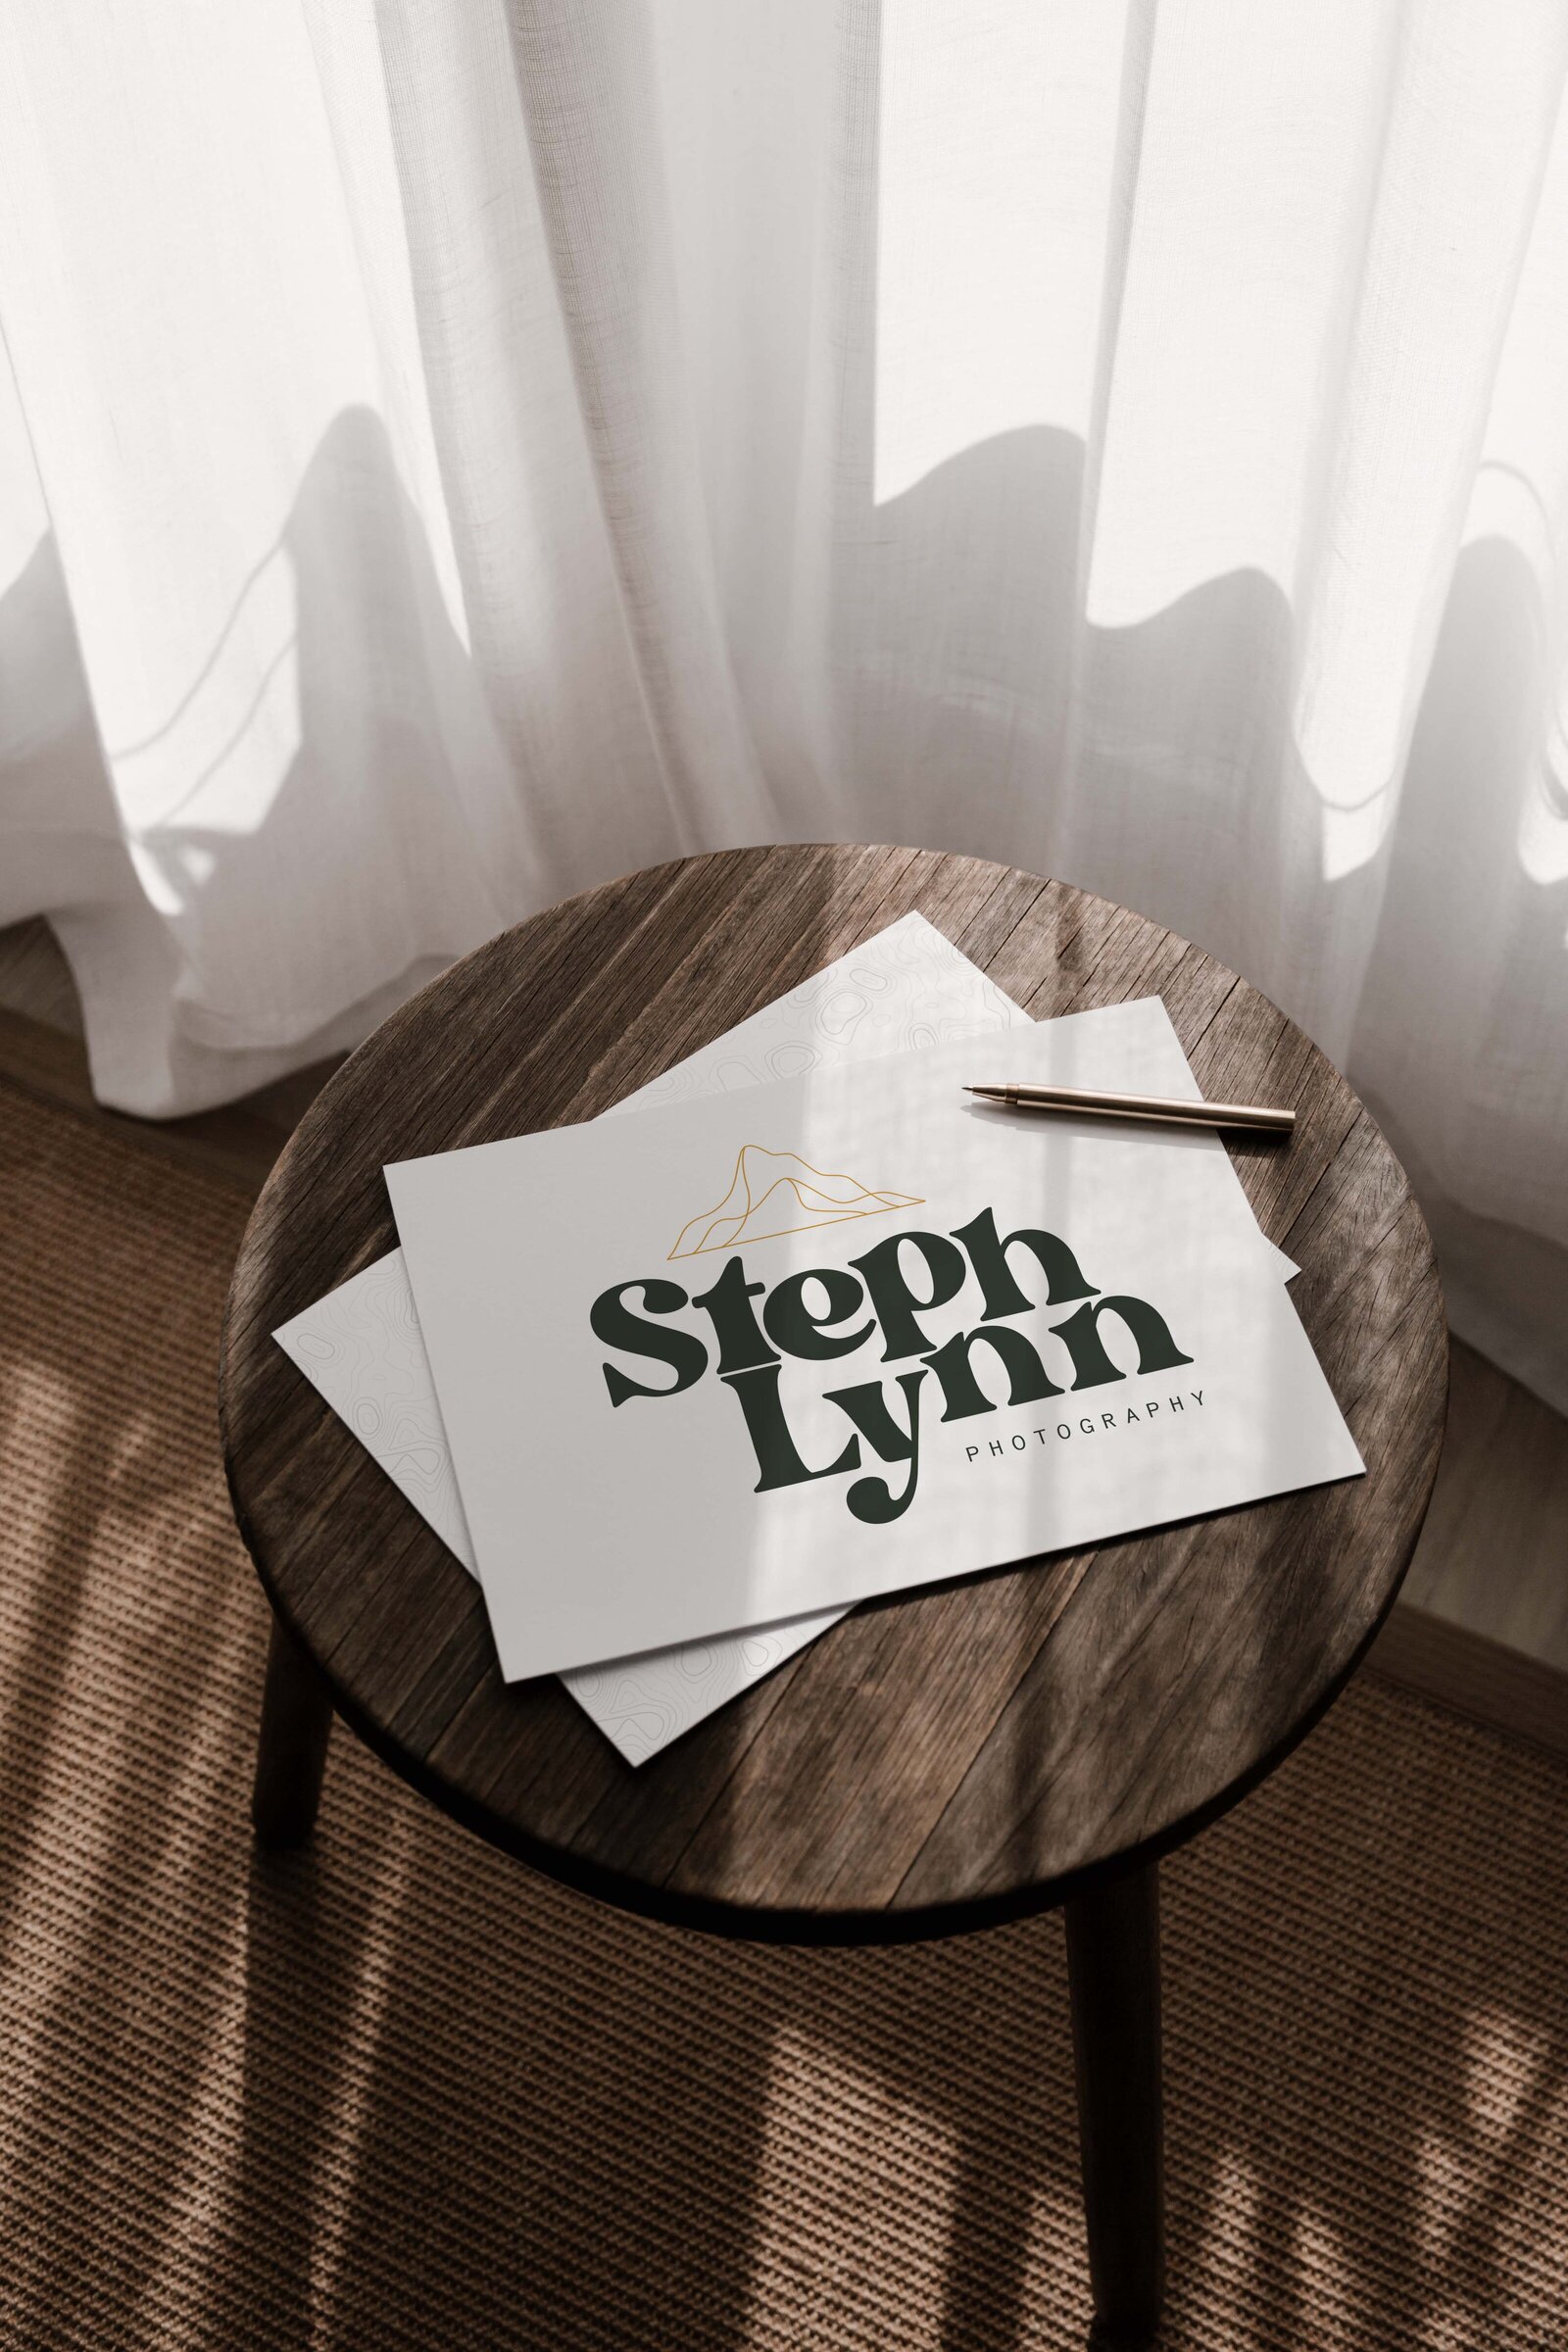 Steph Lynn Photography 1